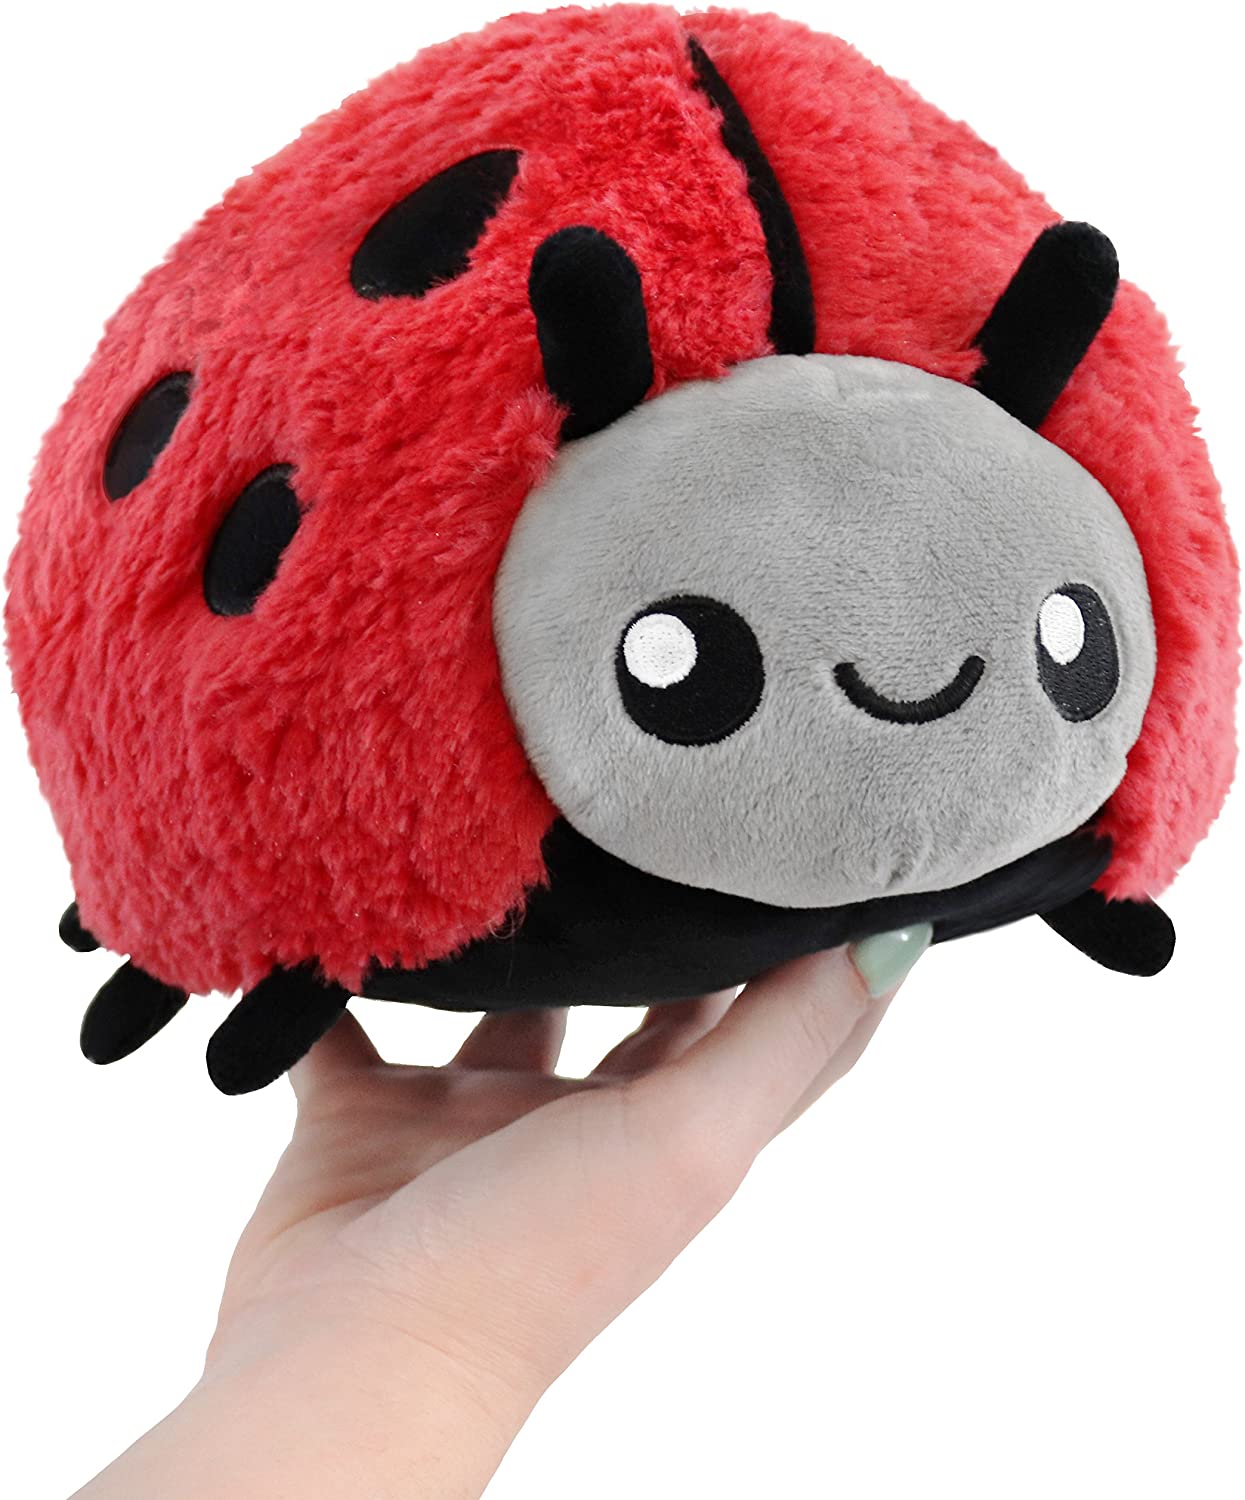 Mini Squishable Ladybug (7")